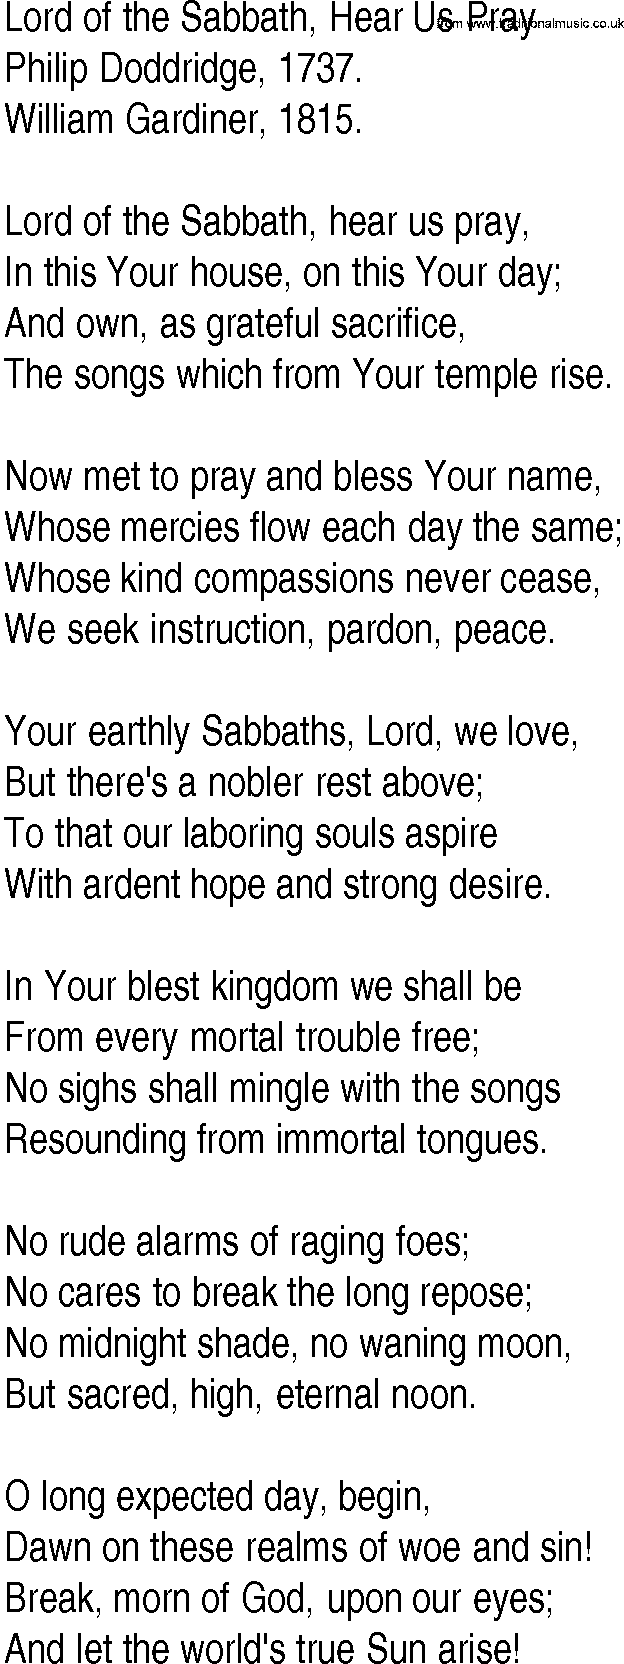 Hymn and Gospel Song: Lord of the Sabbath, Hear Us Pray by Philip Doddridge lyrics